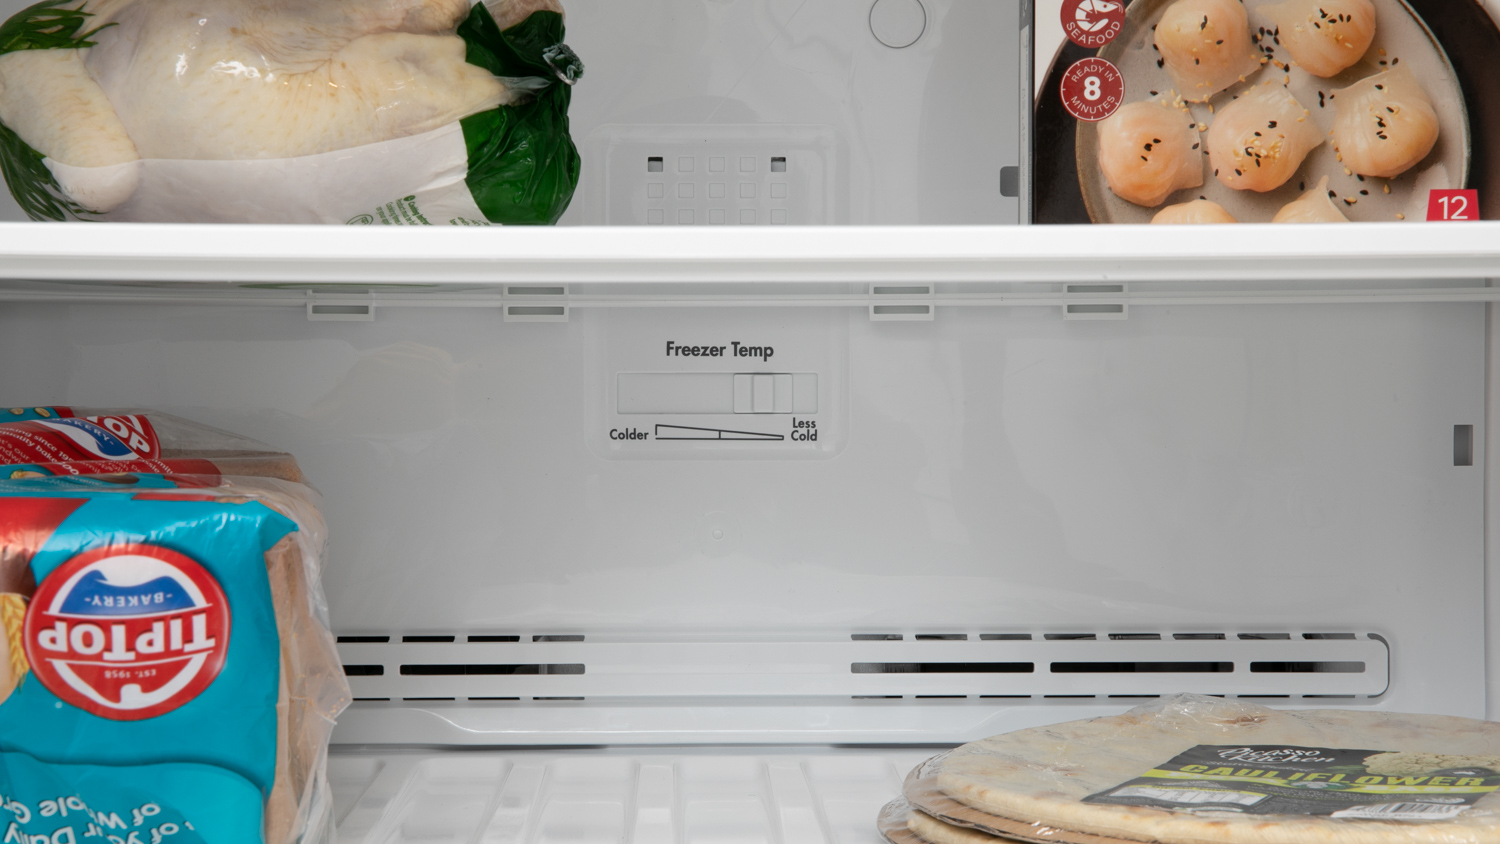 Kelvinator KTM5402WC Review | Best rated fridges | CHOICE